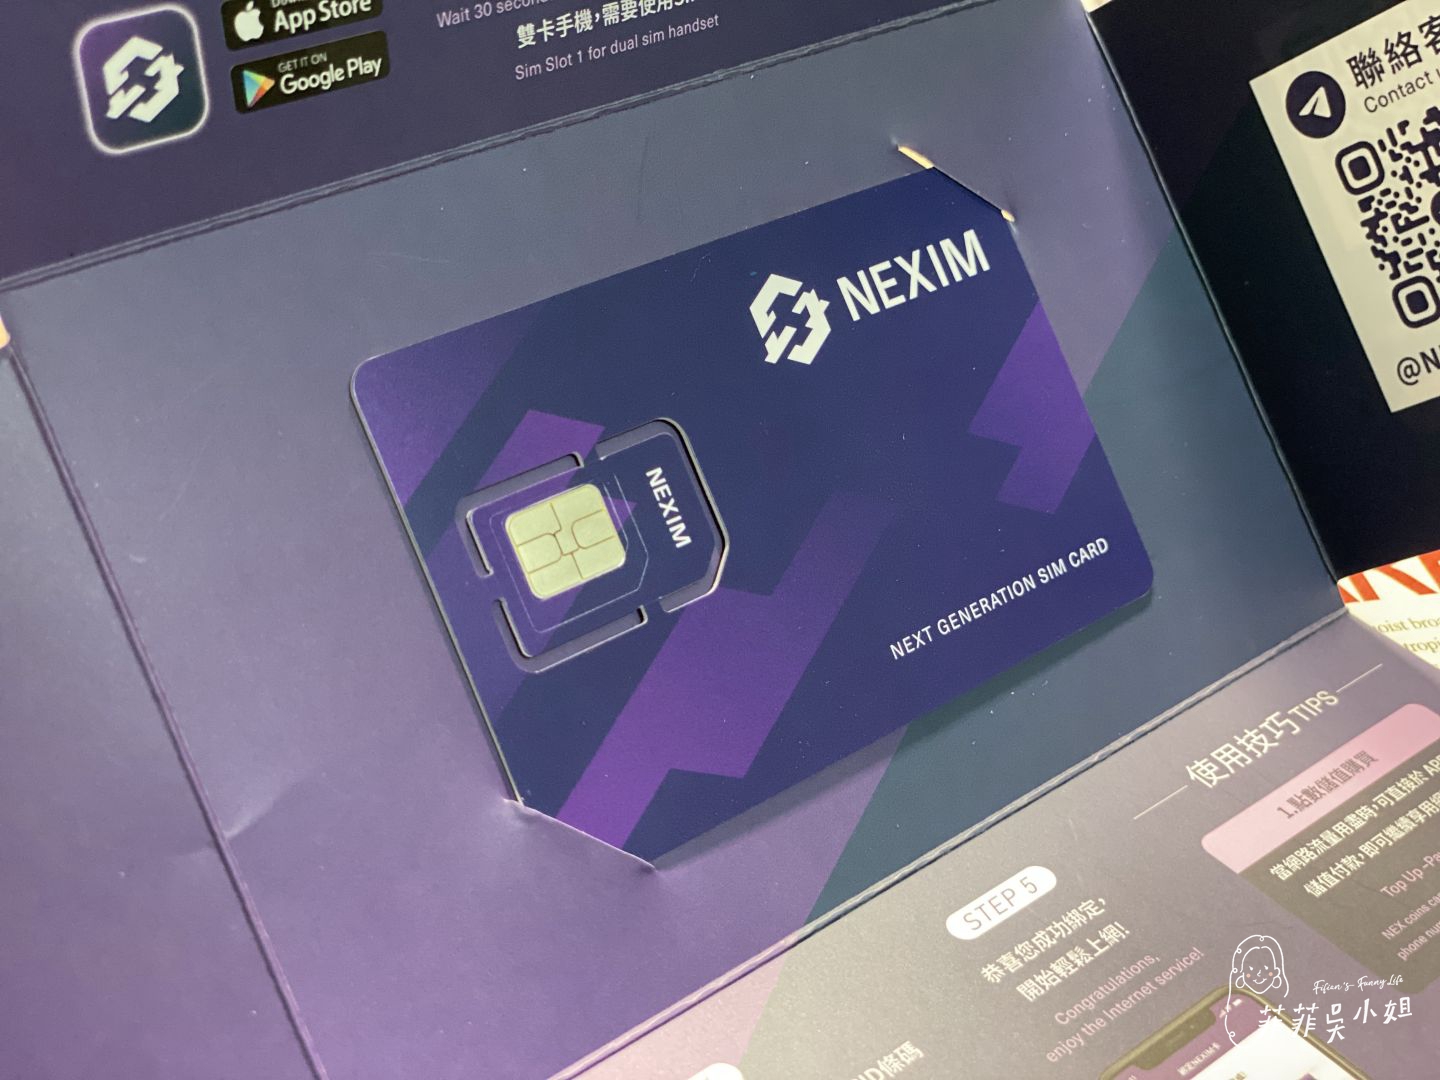 NEXIM保護芯，旅行網路卡推薦，可以重覆使用的國際SIM卡！隨時連線全球網路，多國虛擬門號，彈性資費自由配 @菲菲吳小姐